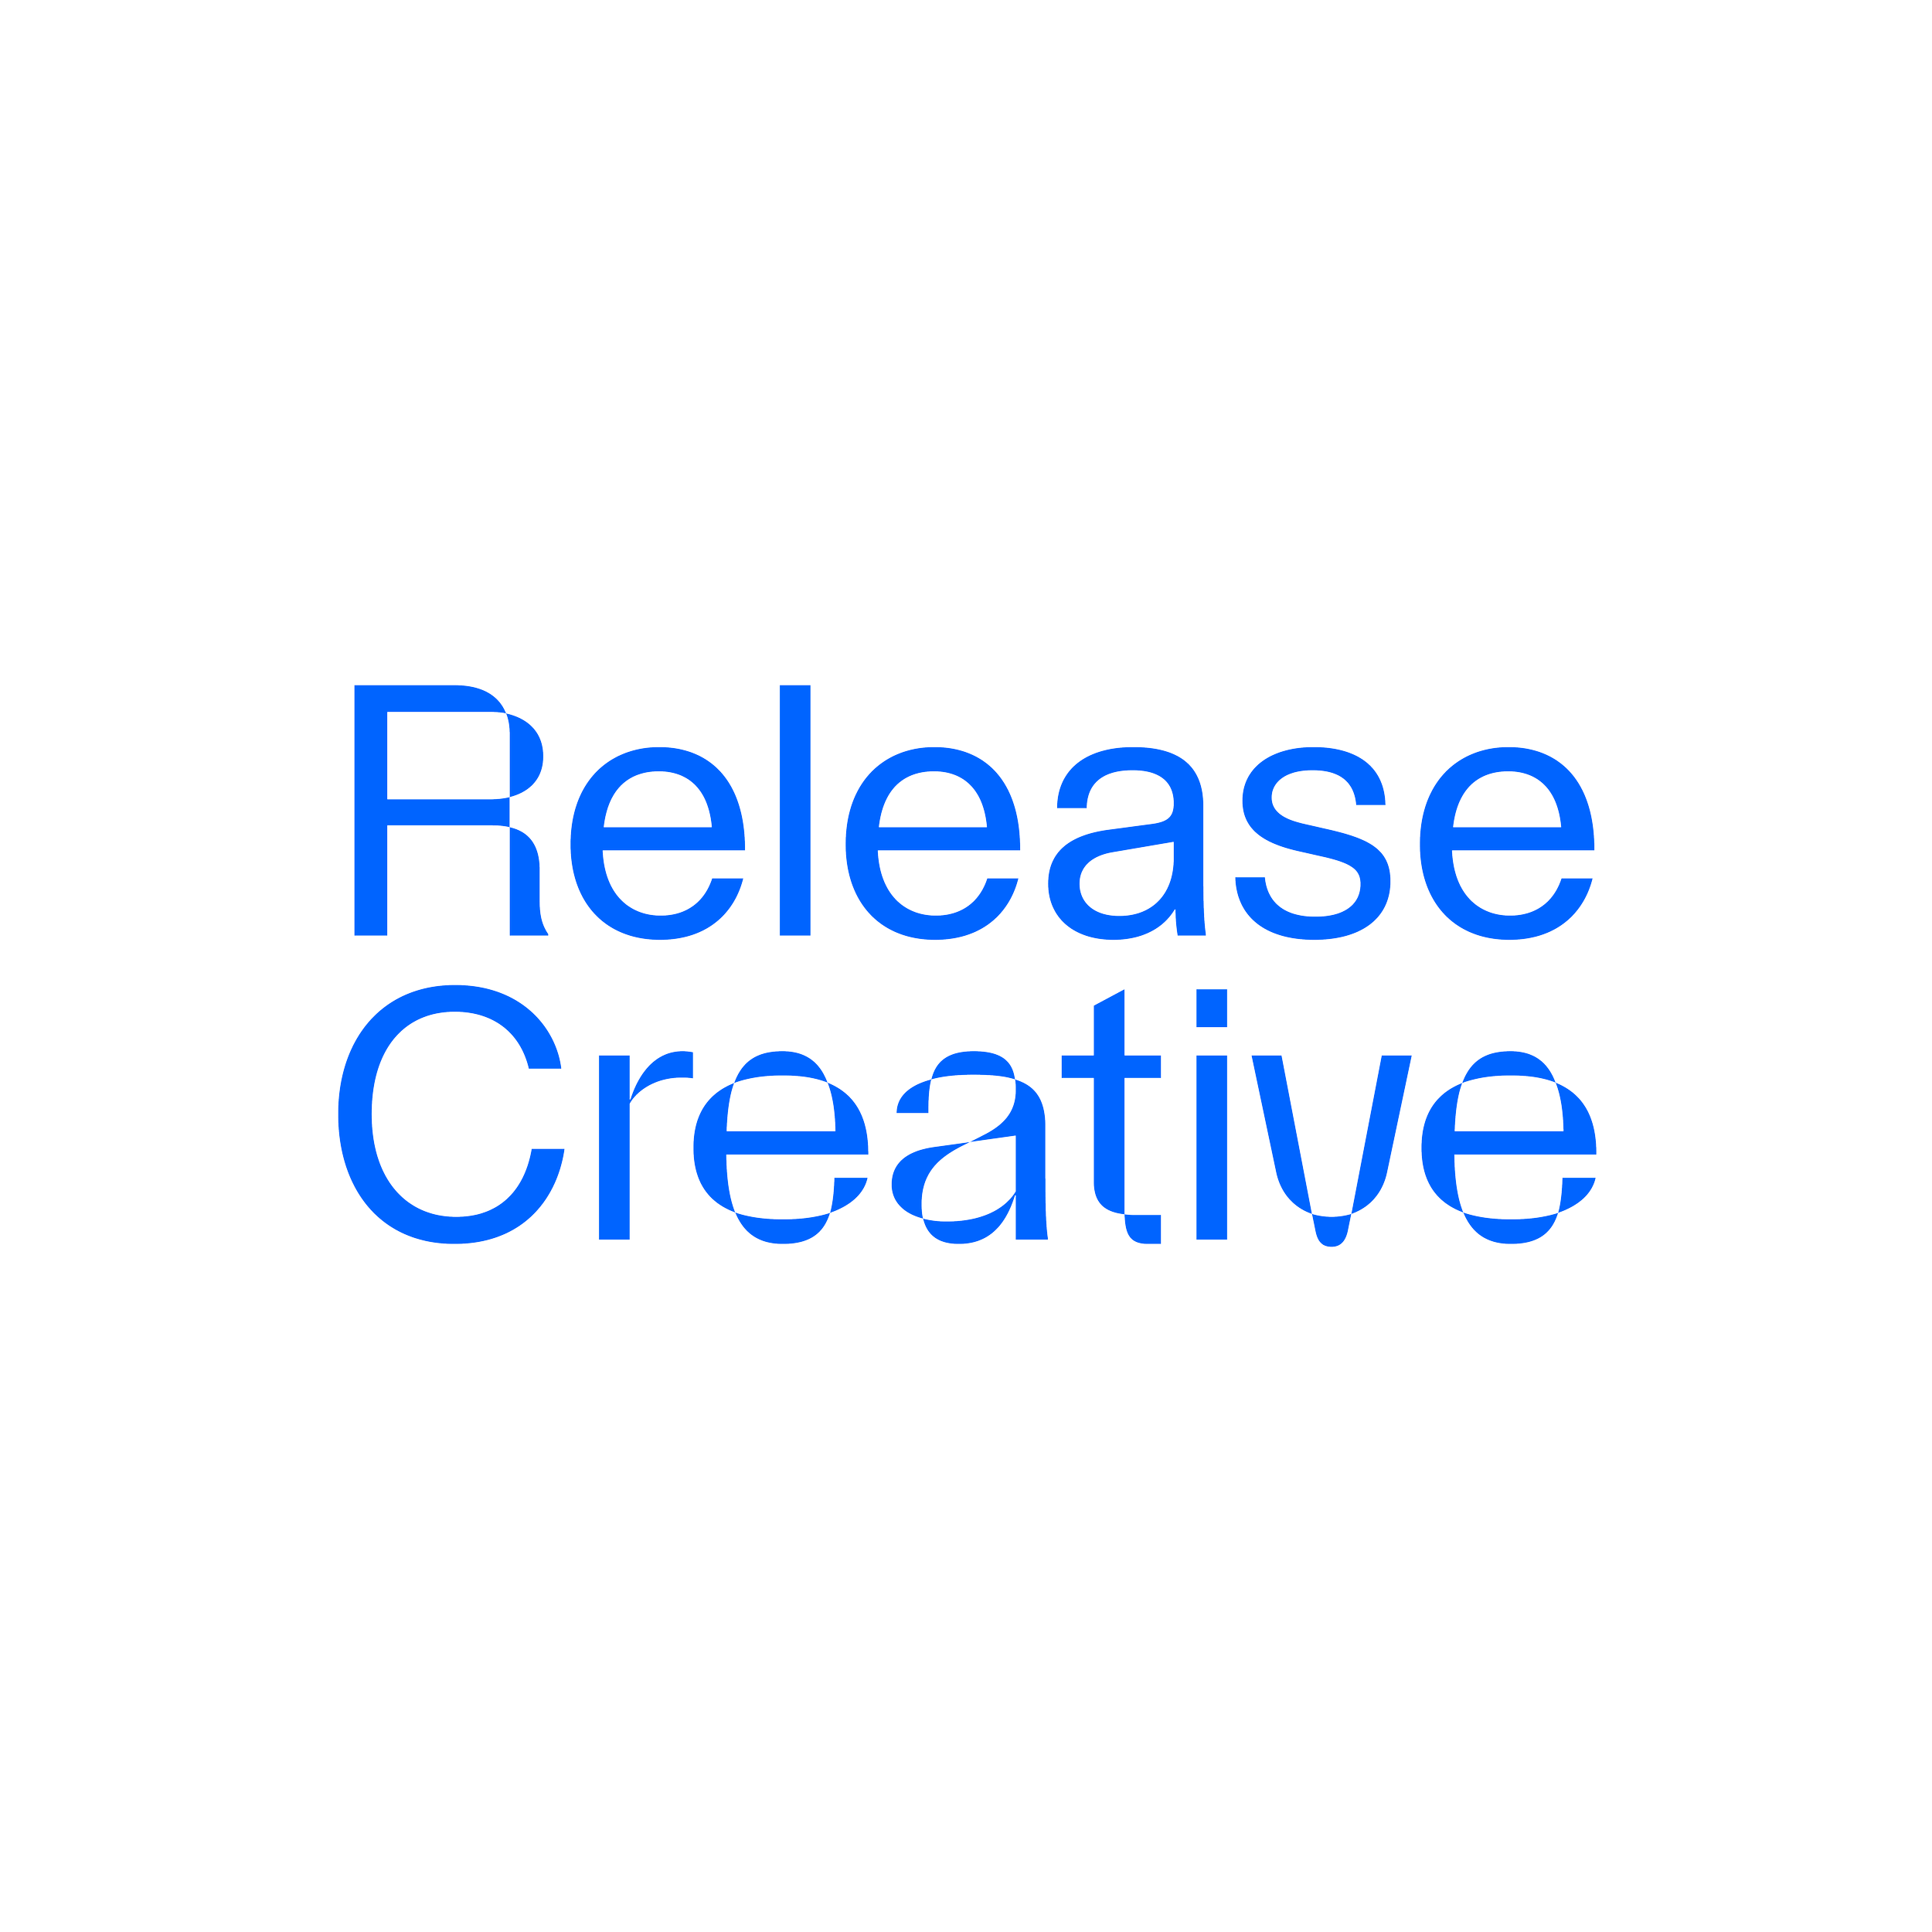 Release Creative